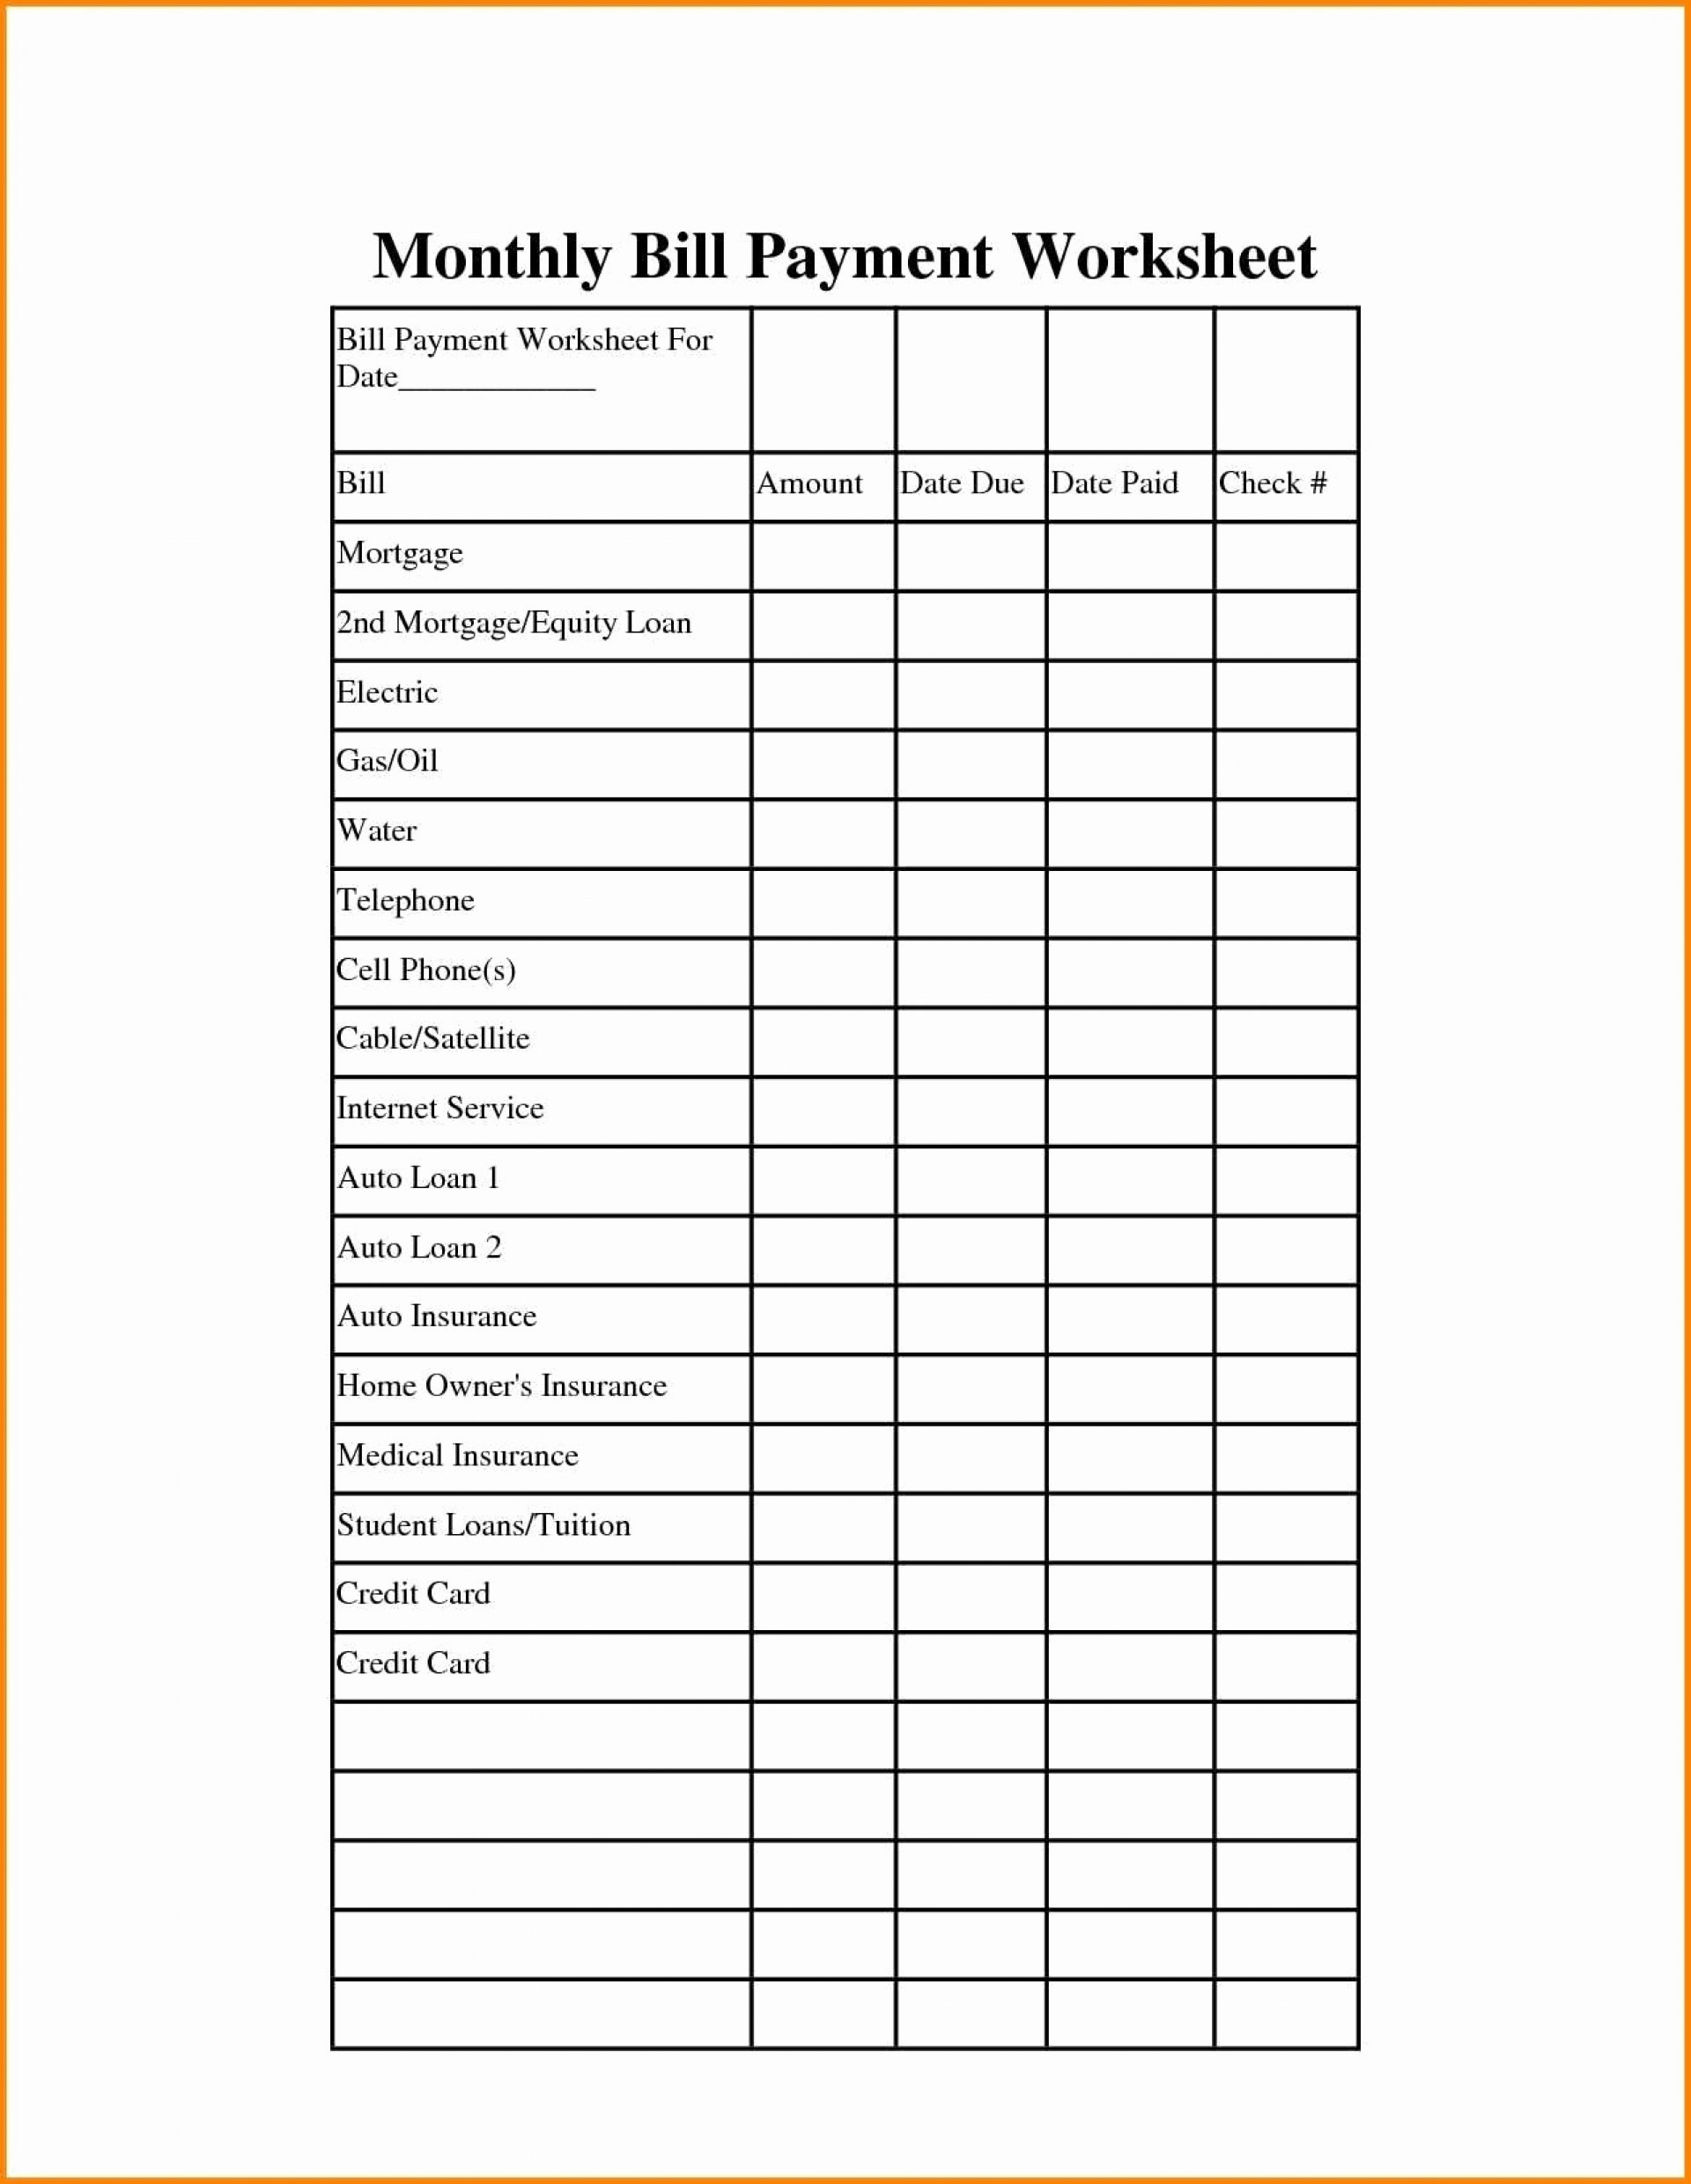 Weekly Bill Paying Worksheet - Template Calendar Design  Free Bill Pay Worksheet